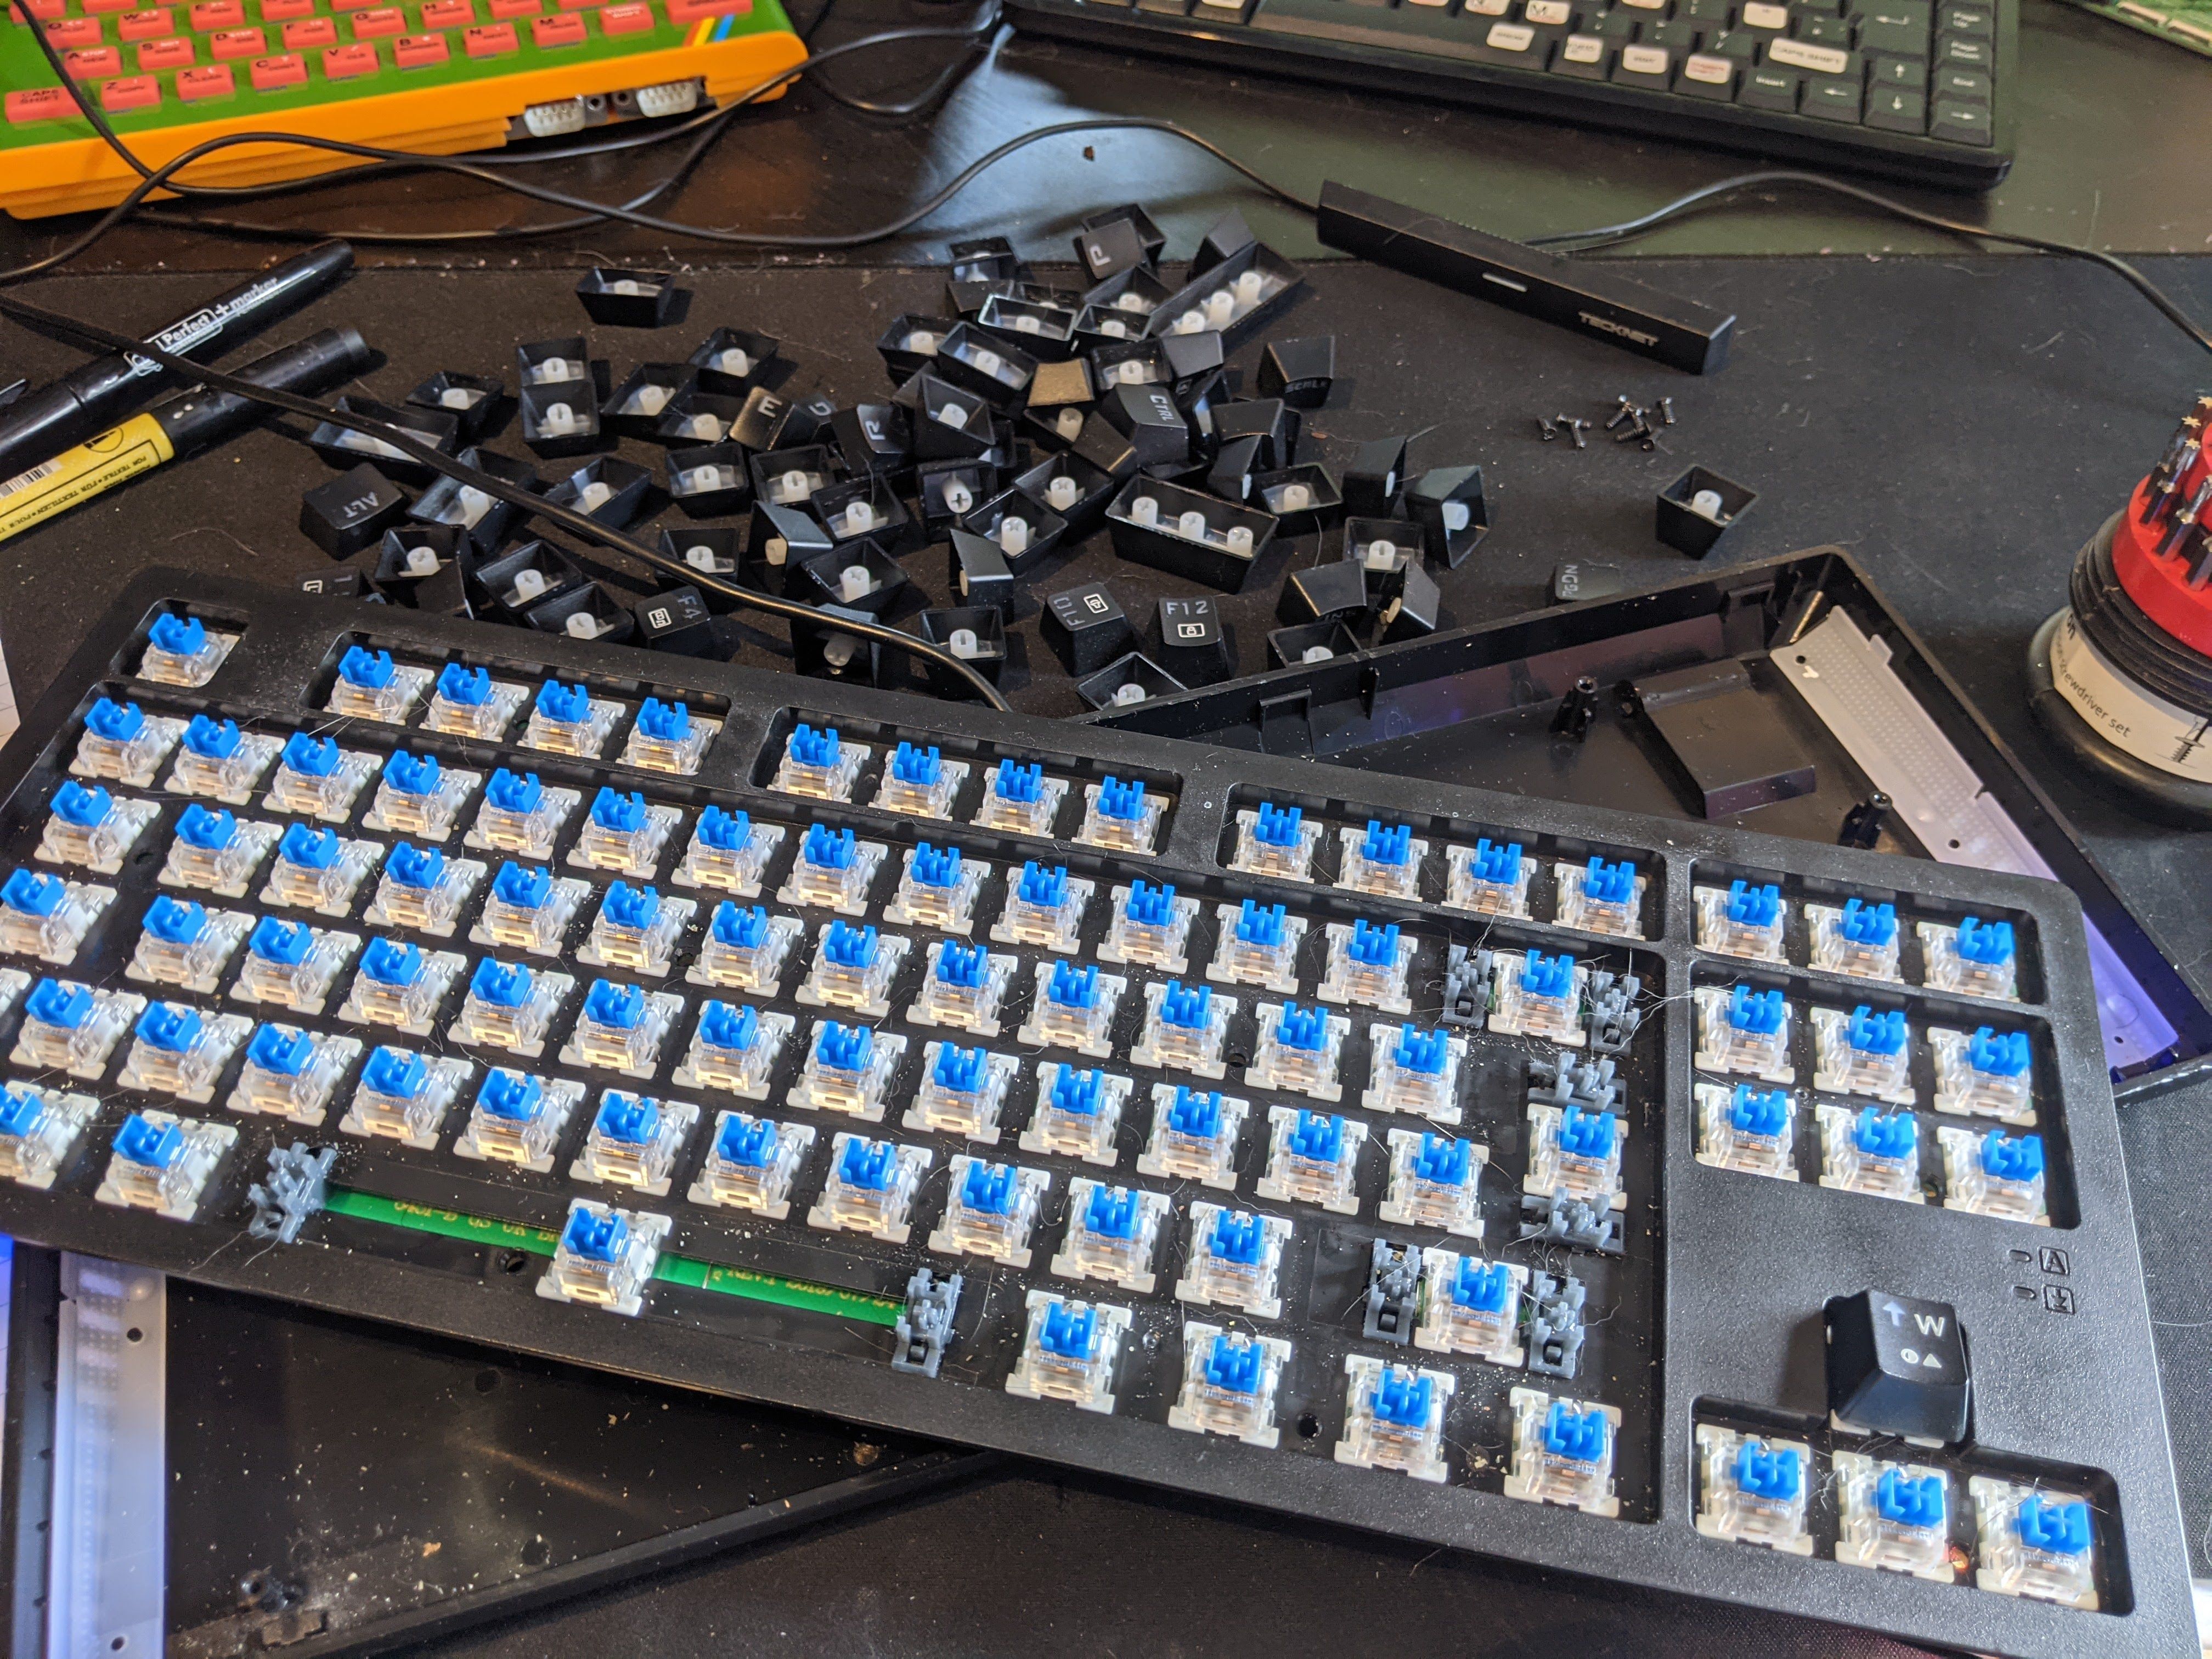 Tecknet mechanical keyboard with all keys removed